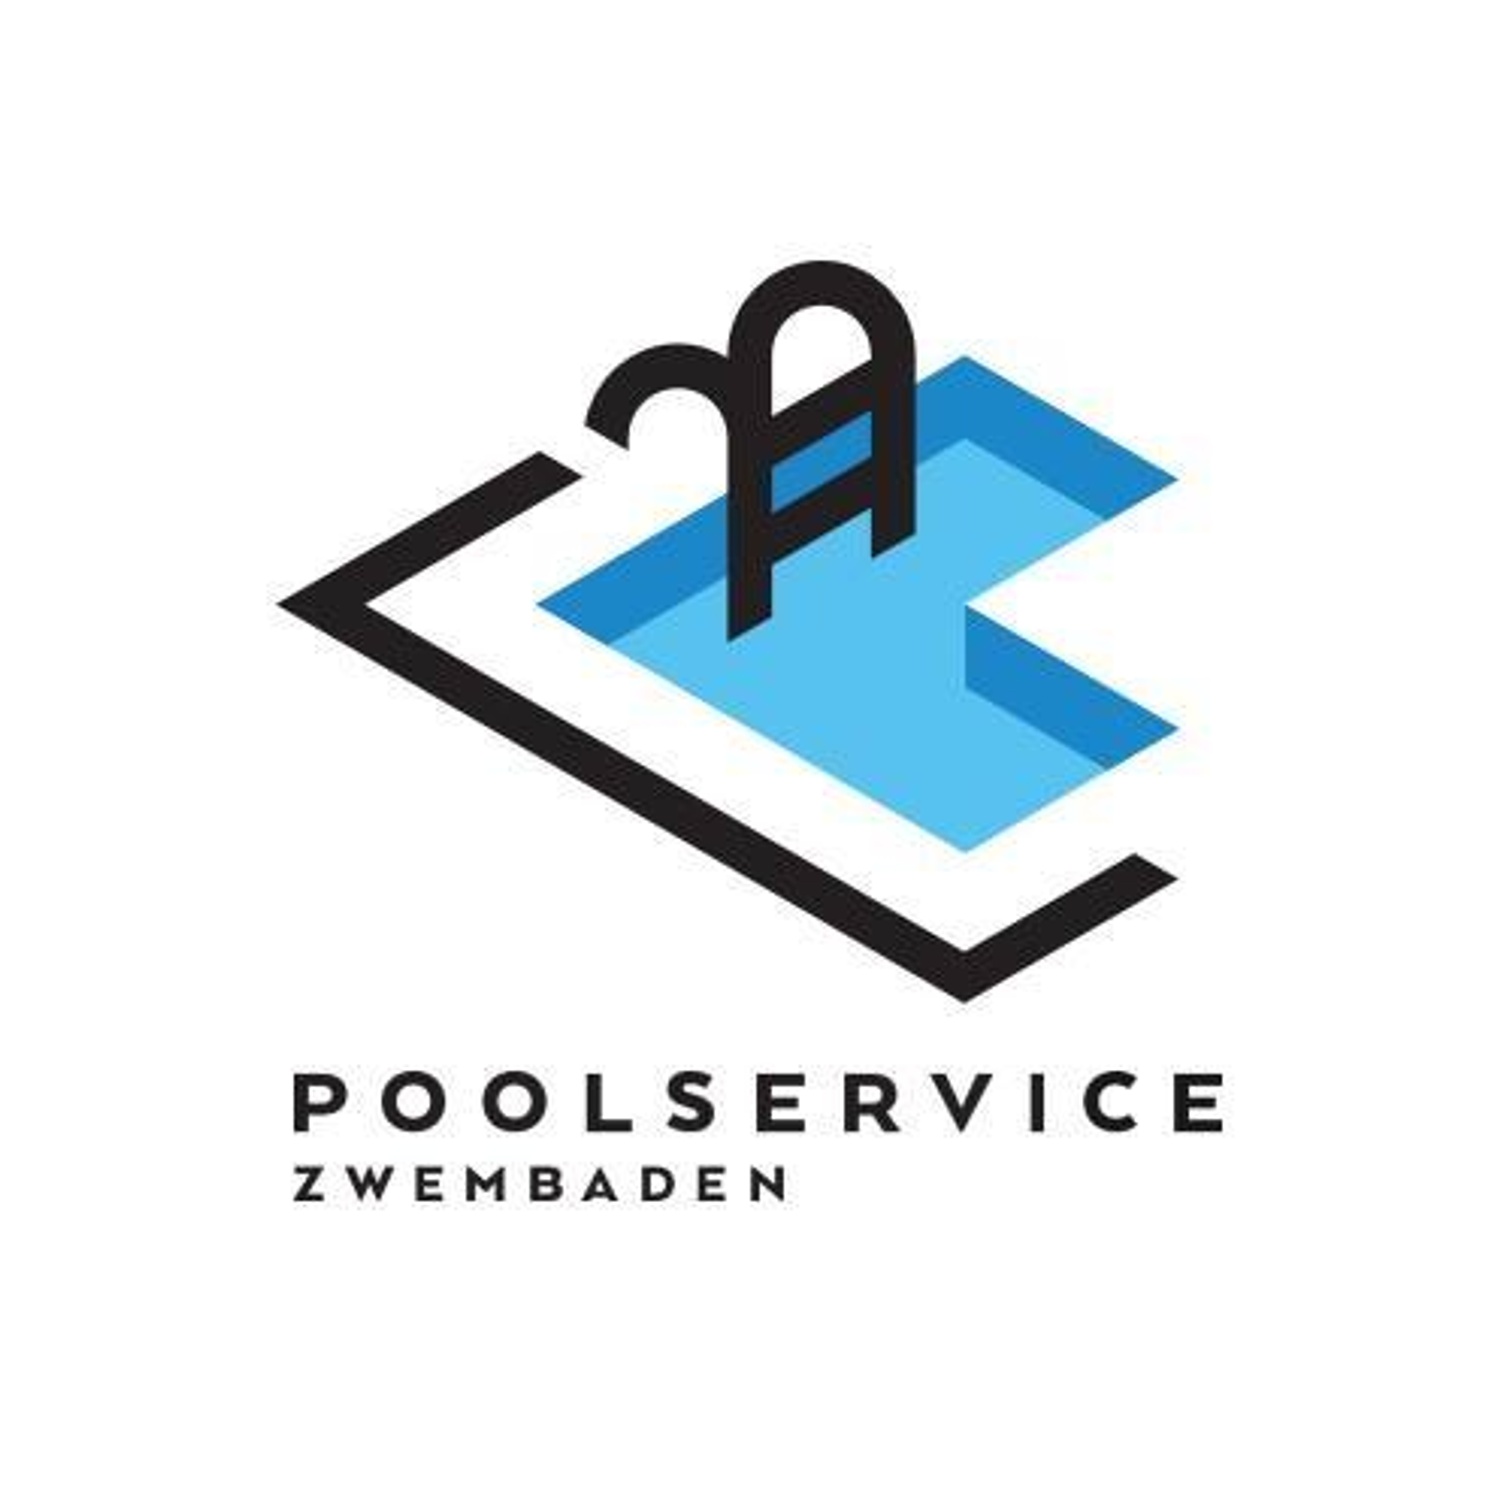 Poolservice logo